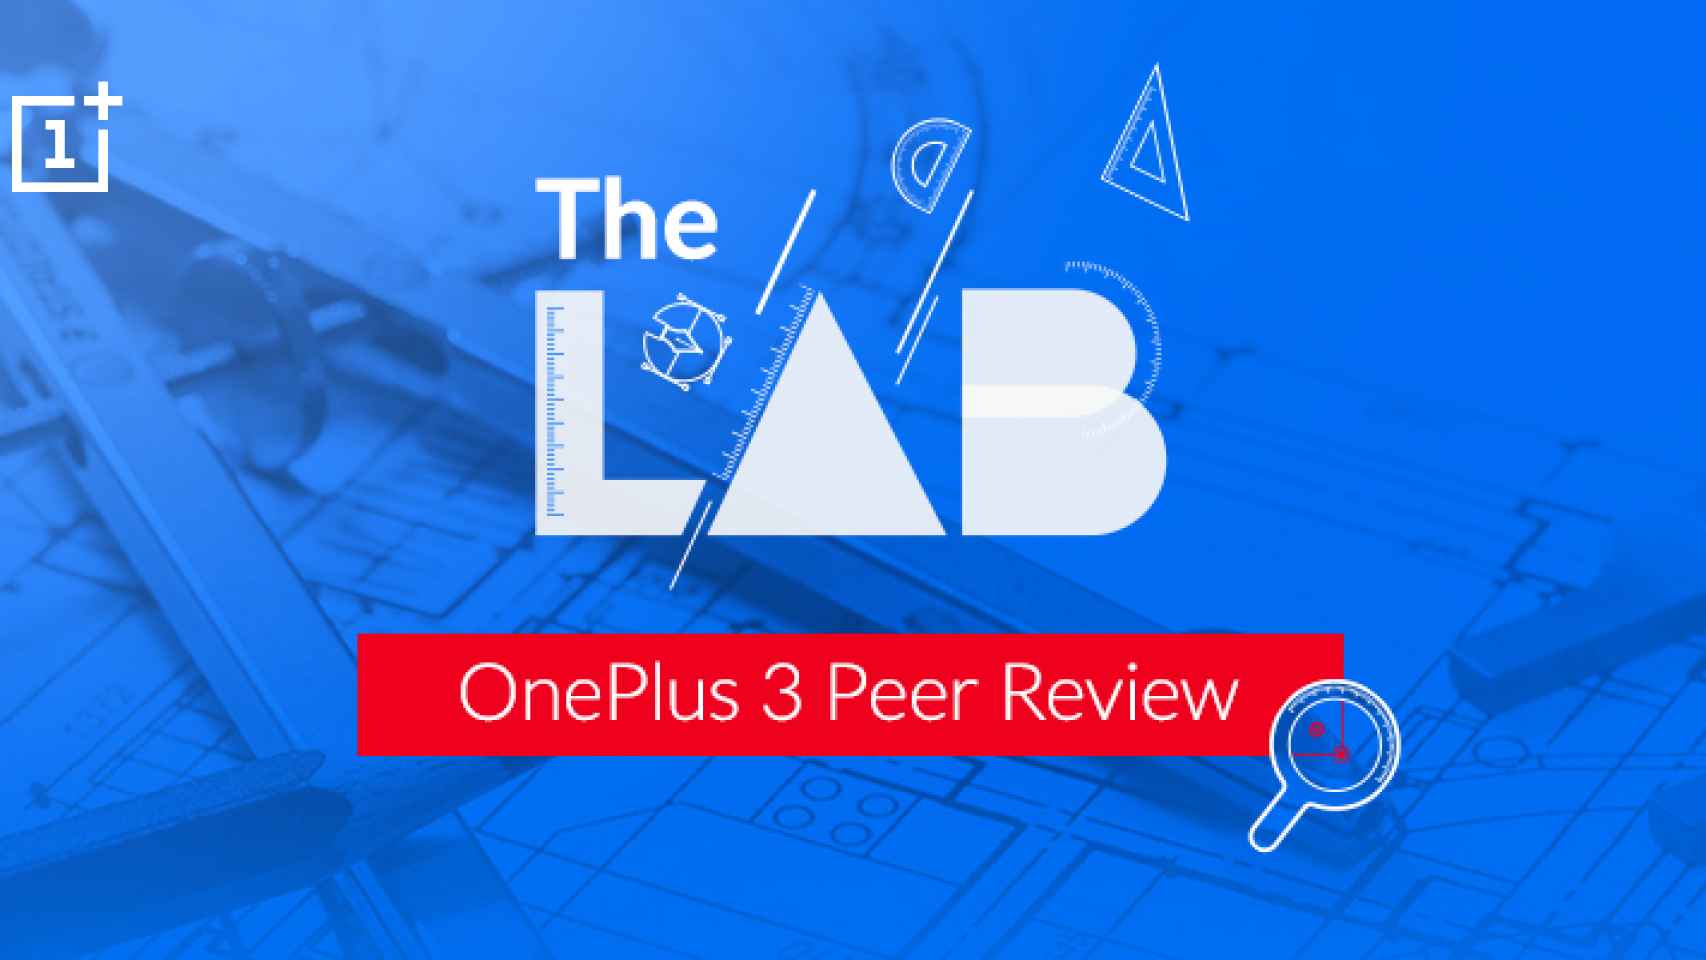 The Lab, prueba el OnePlus 3 antes que nadie